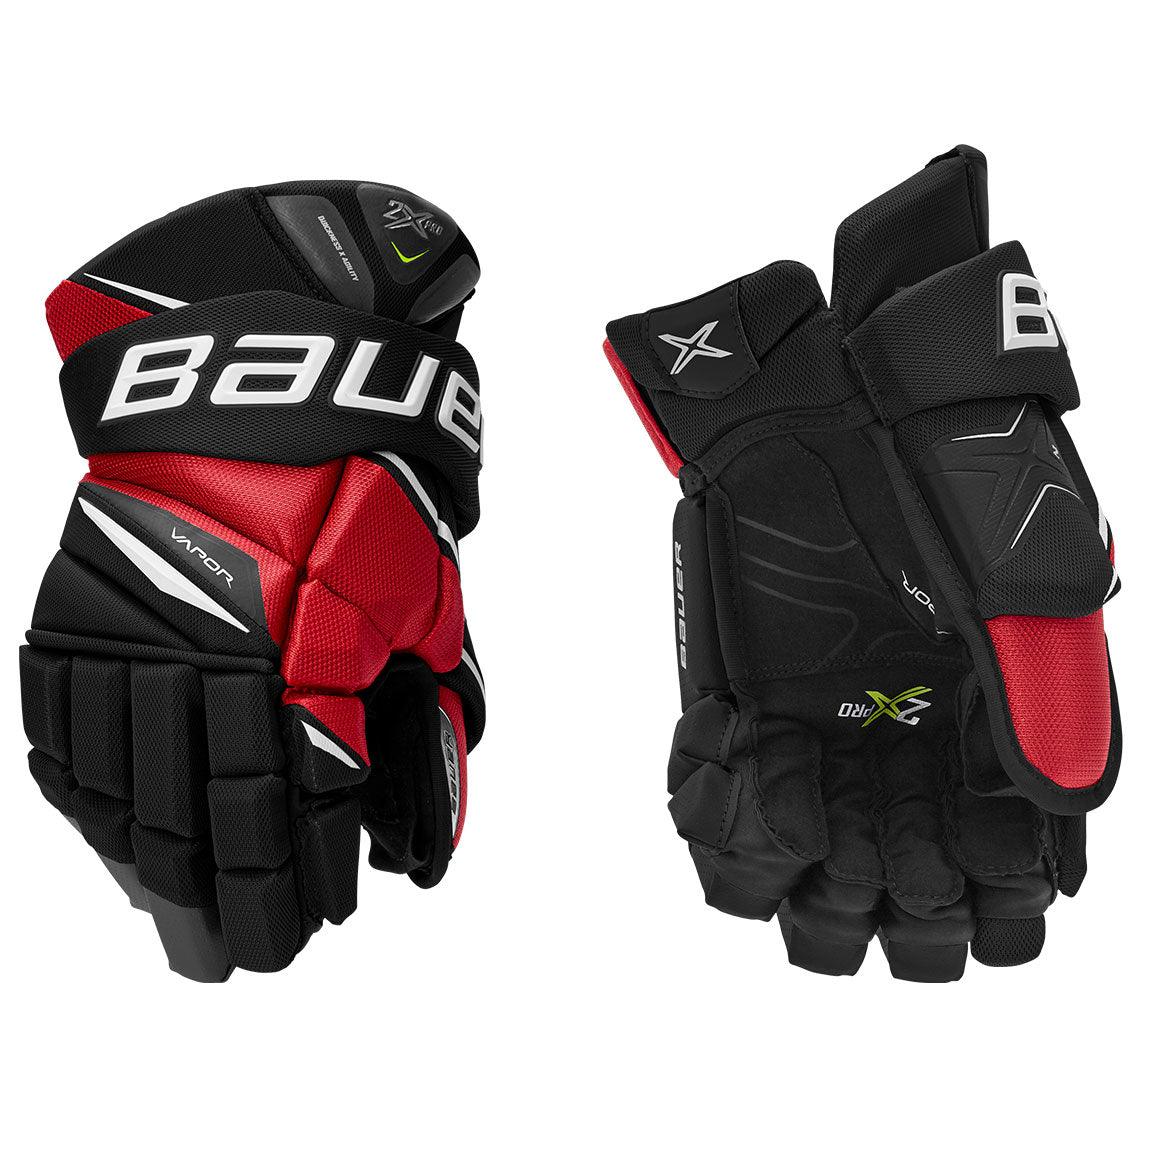 Vapor 2X Hockey Glove - Senior - Sports Excellence